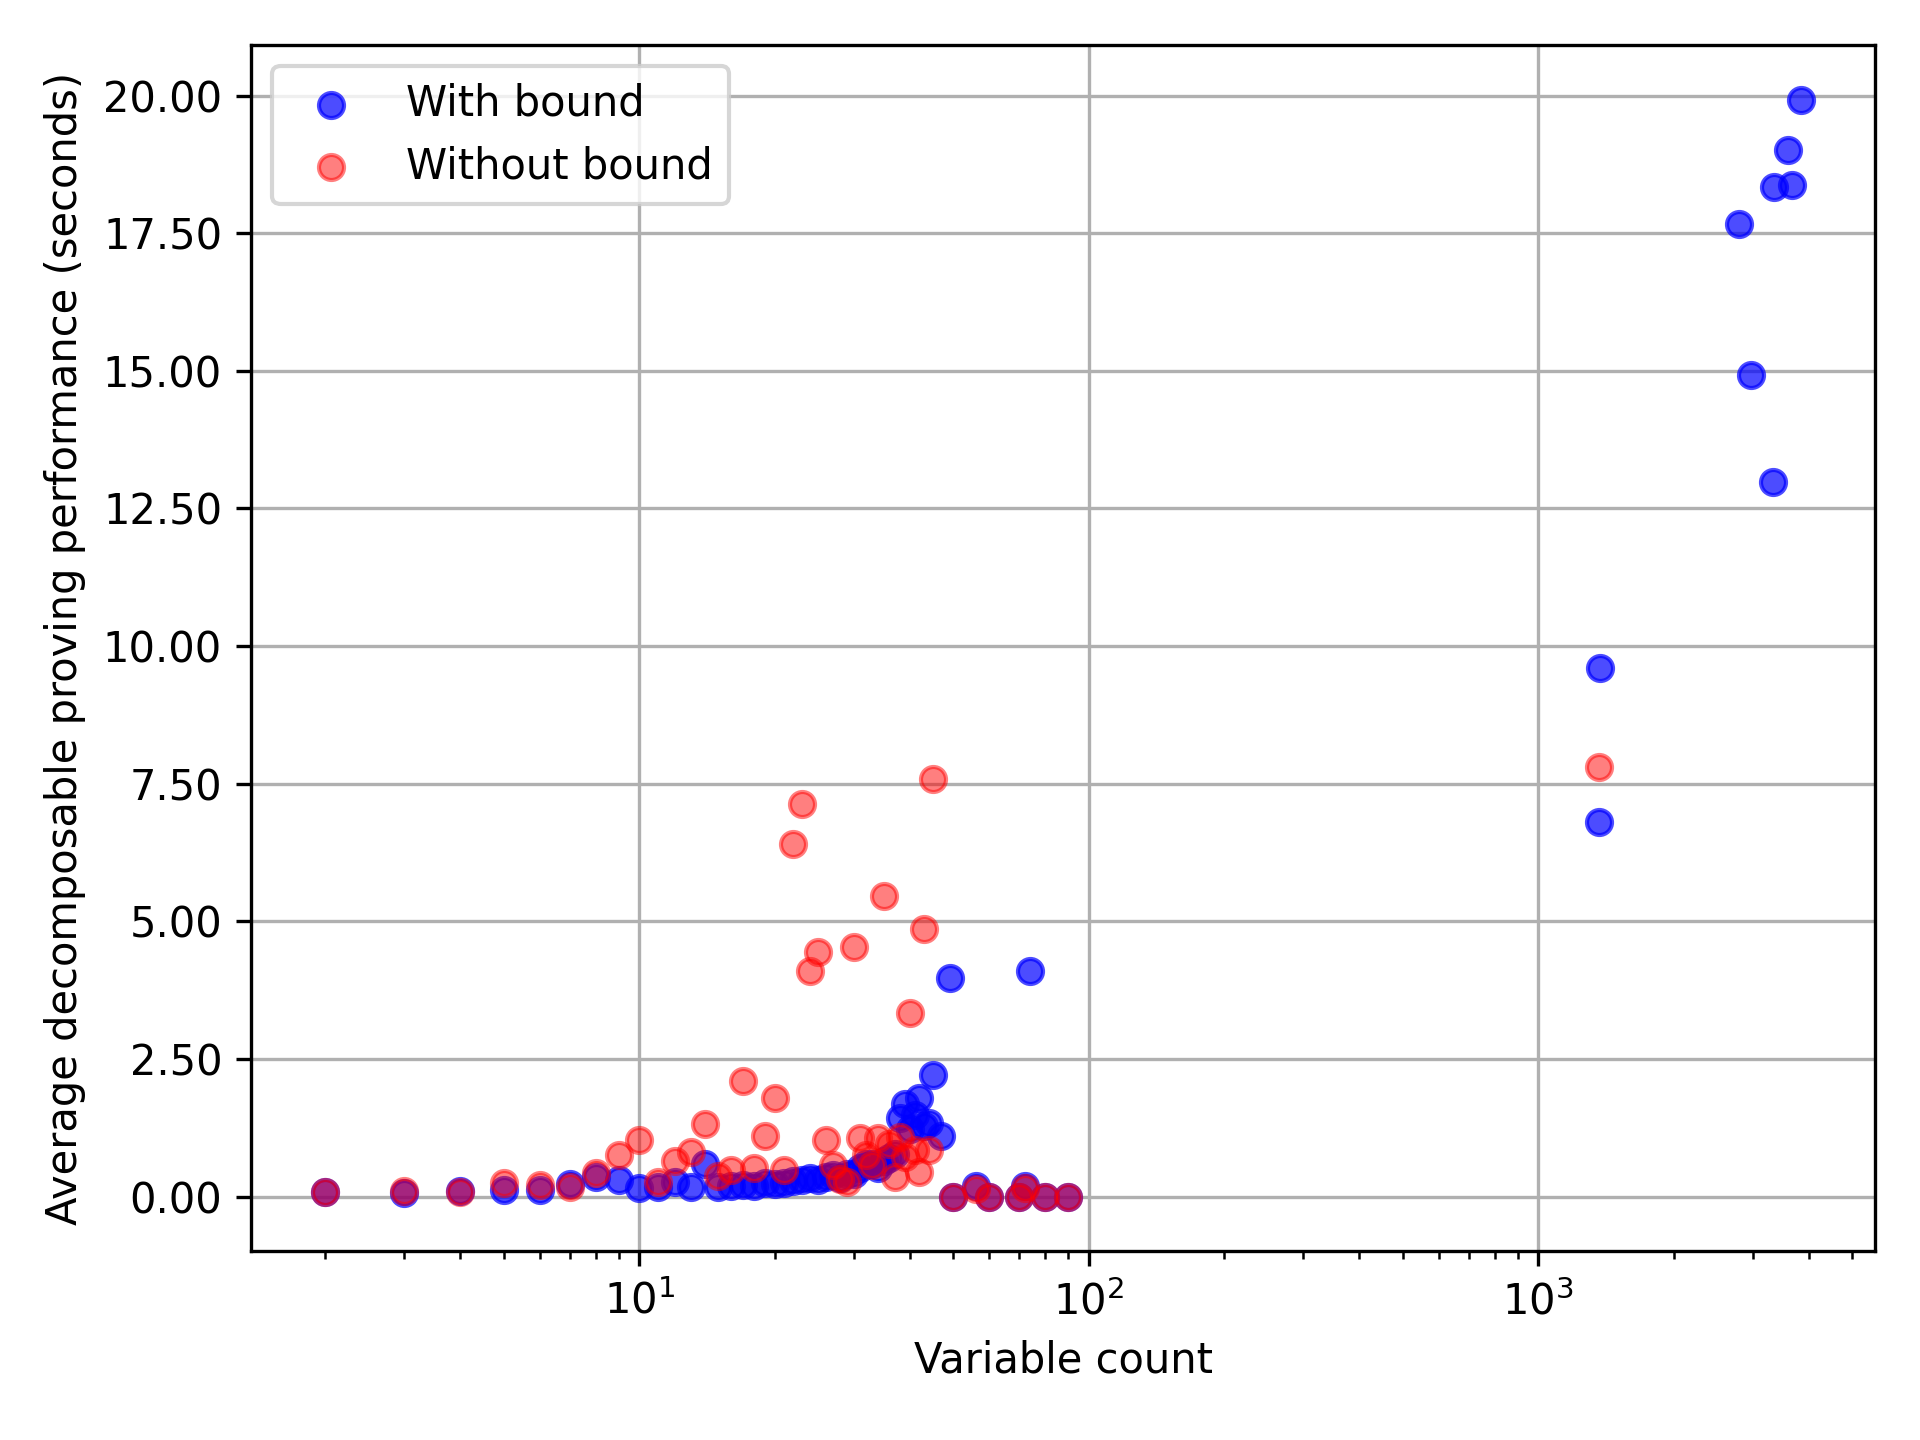 variable count and average mondec performance comparison